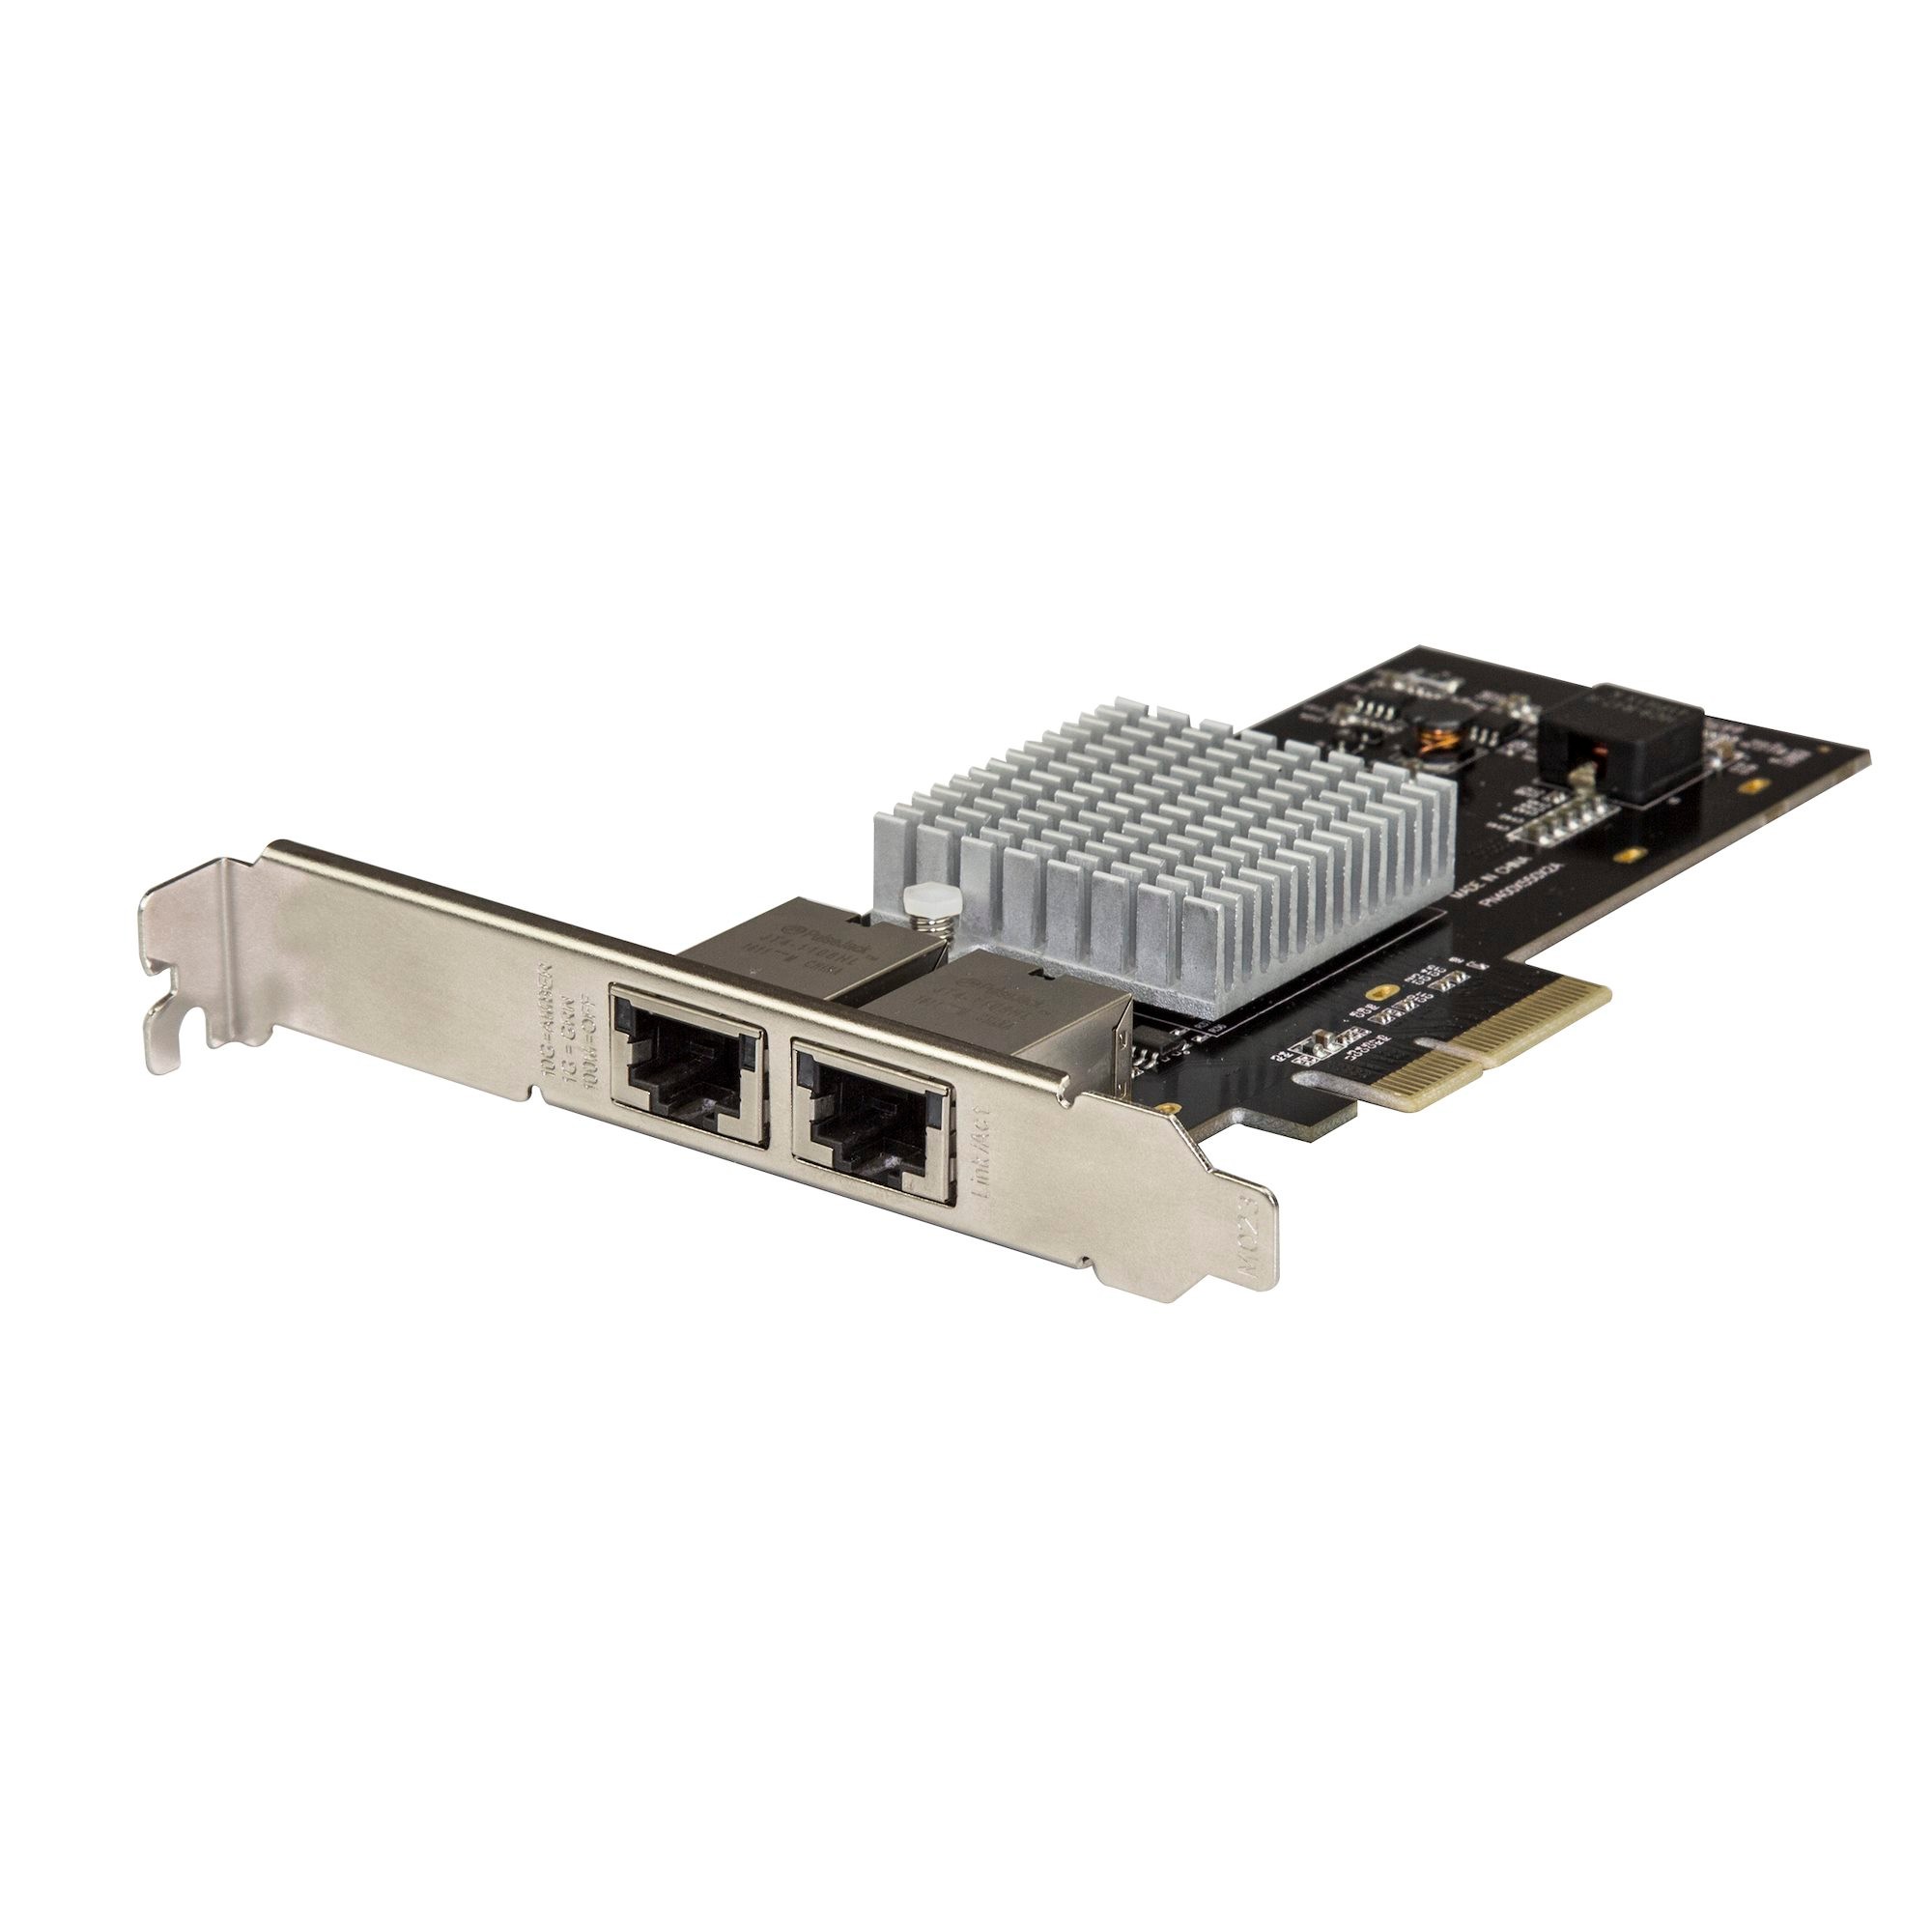 StarTech.com Dual Port 10G PCIe Network Adapter Card - Intel